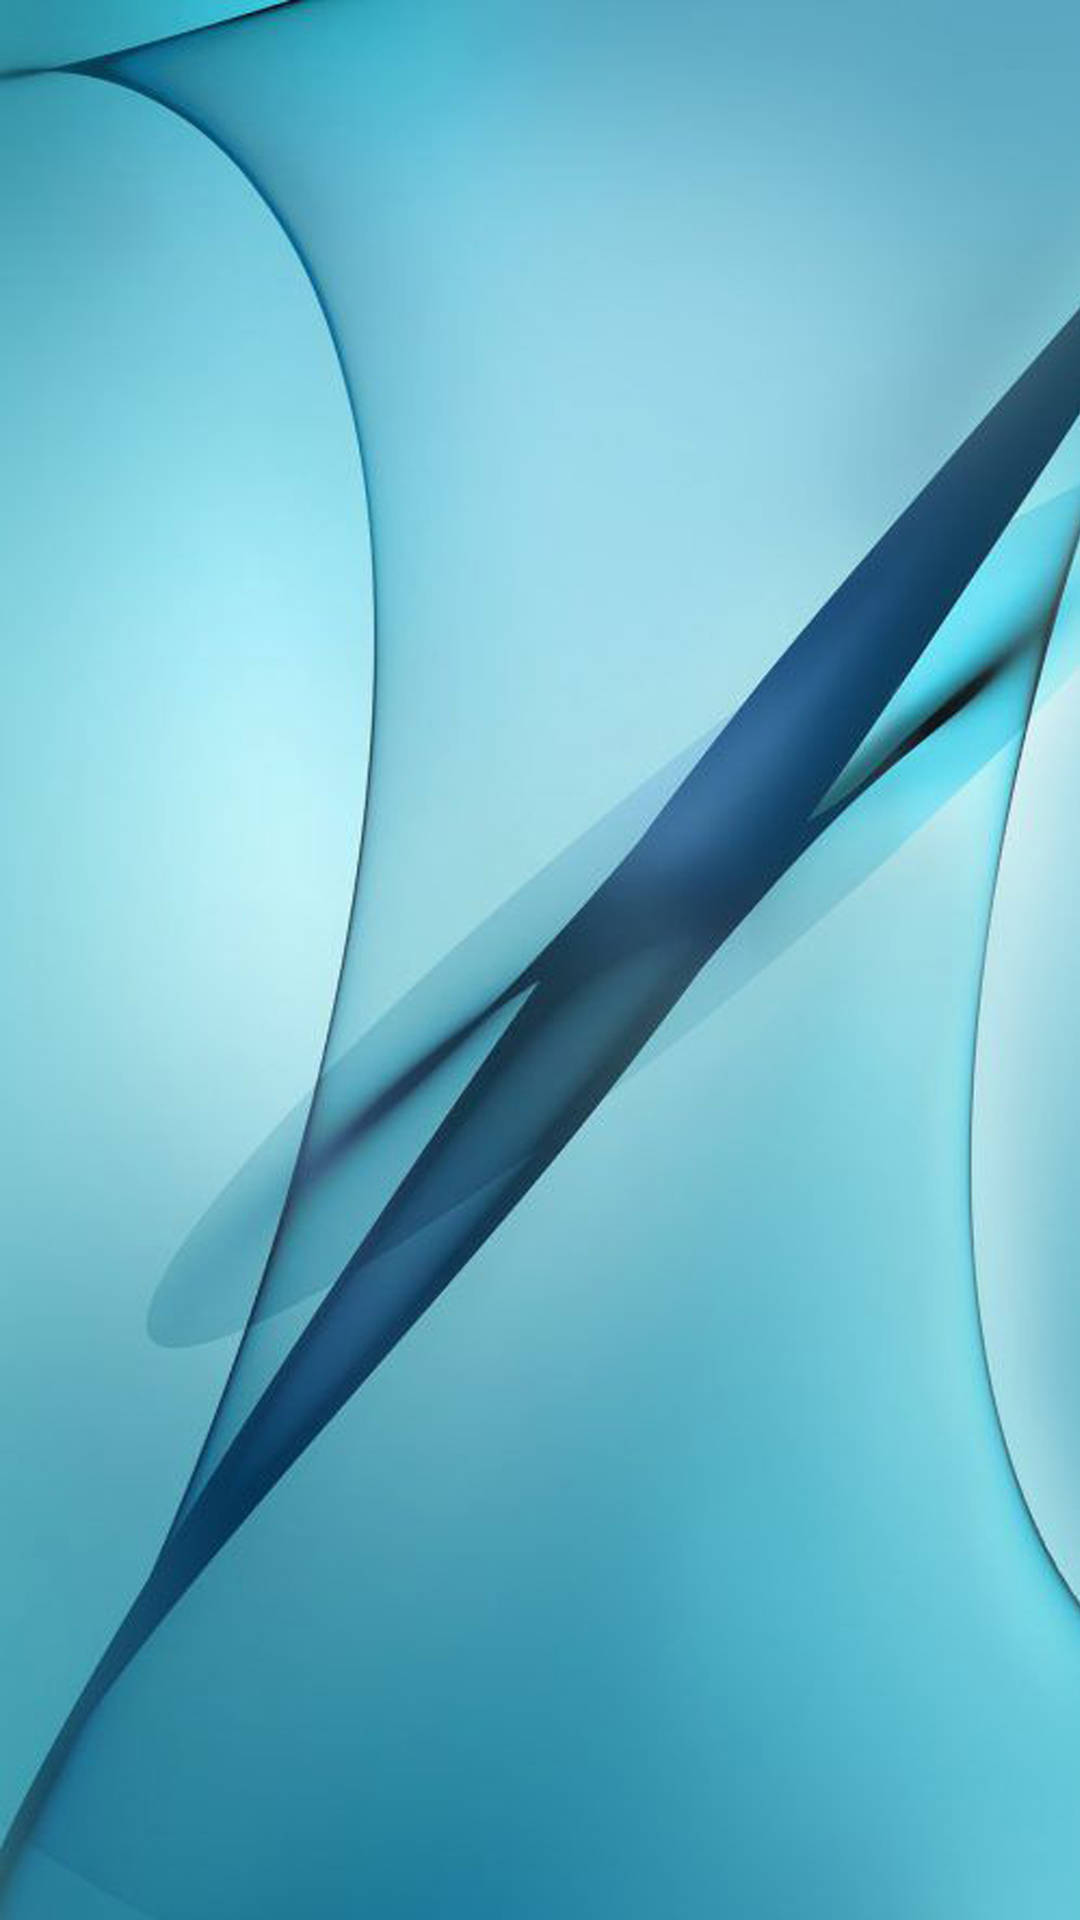 Samsung Galaxy J7 Cerulean Blå Abstrakt Wallpaper